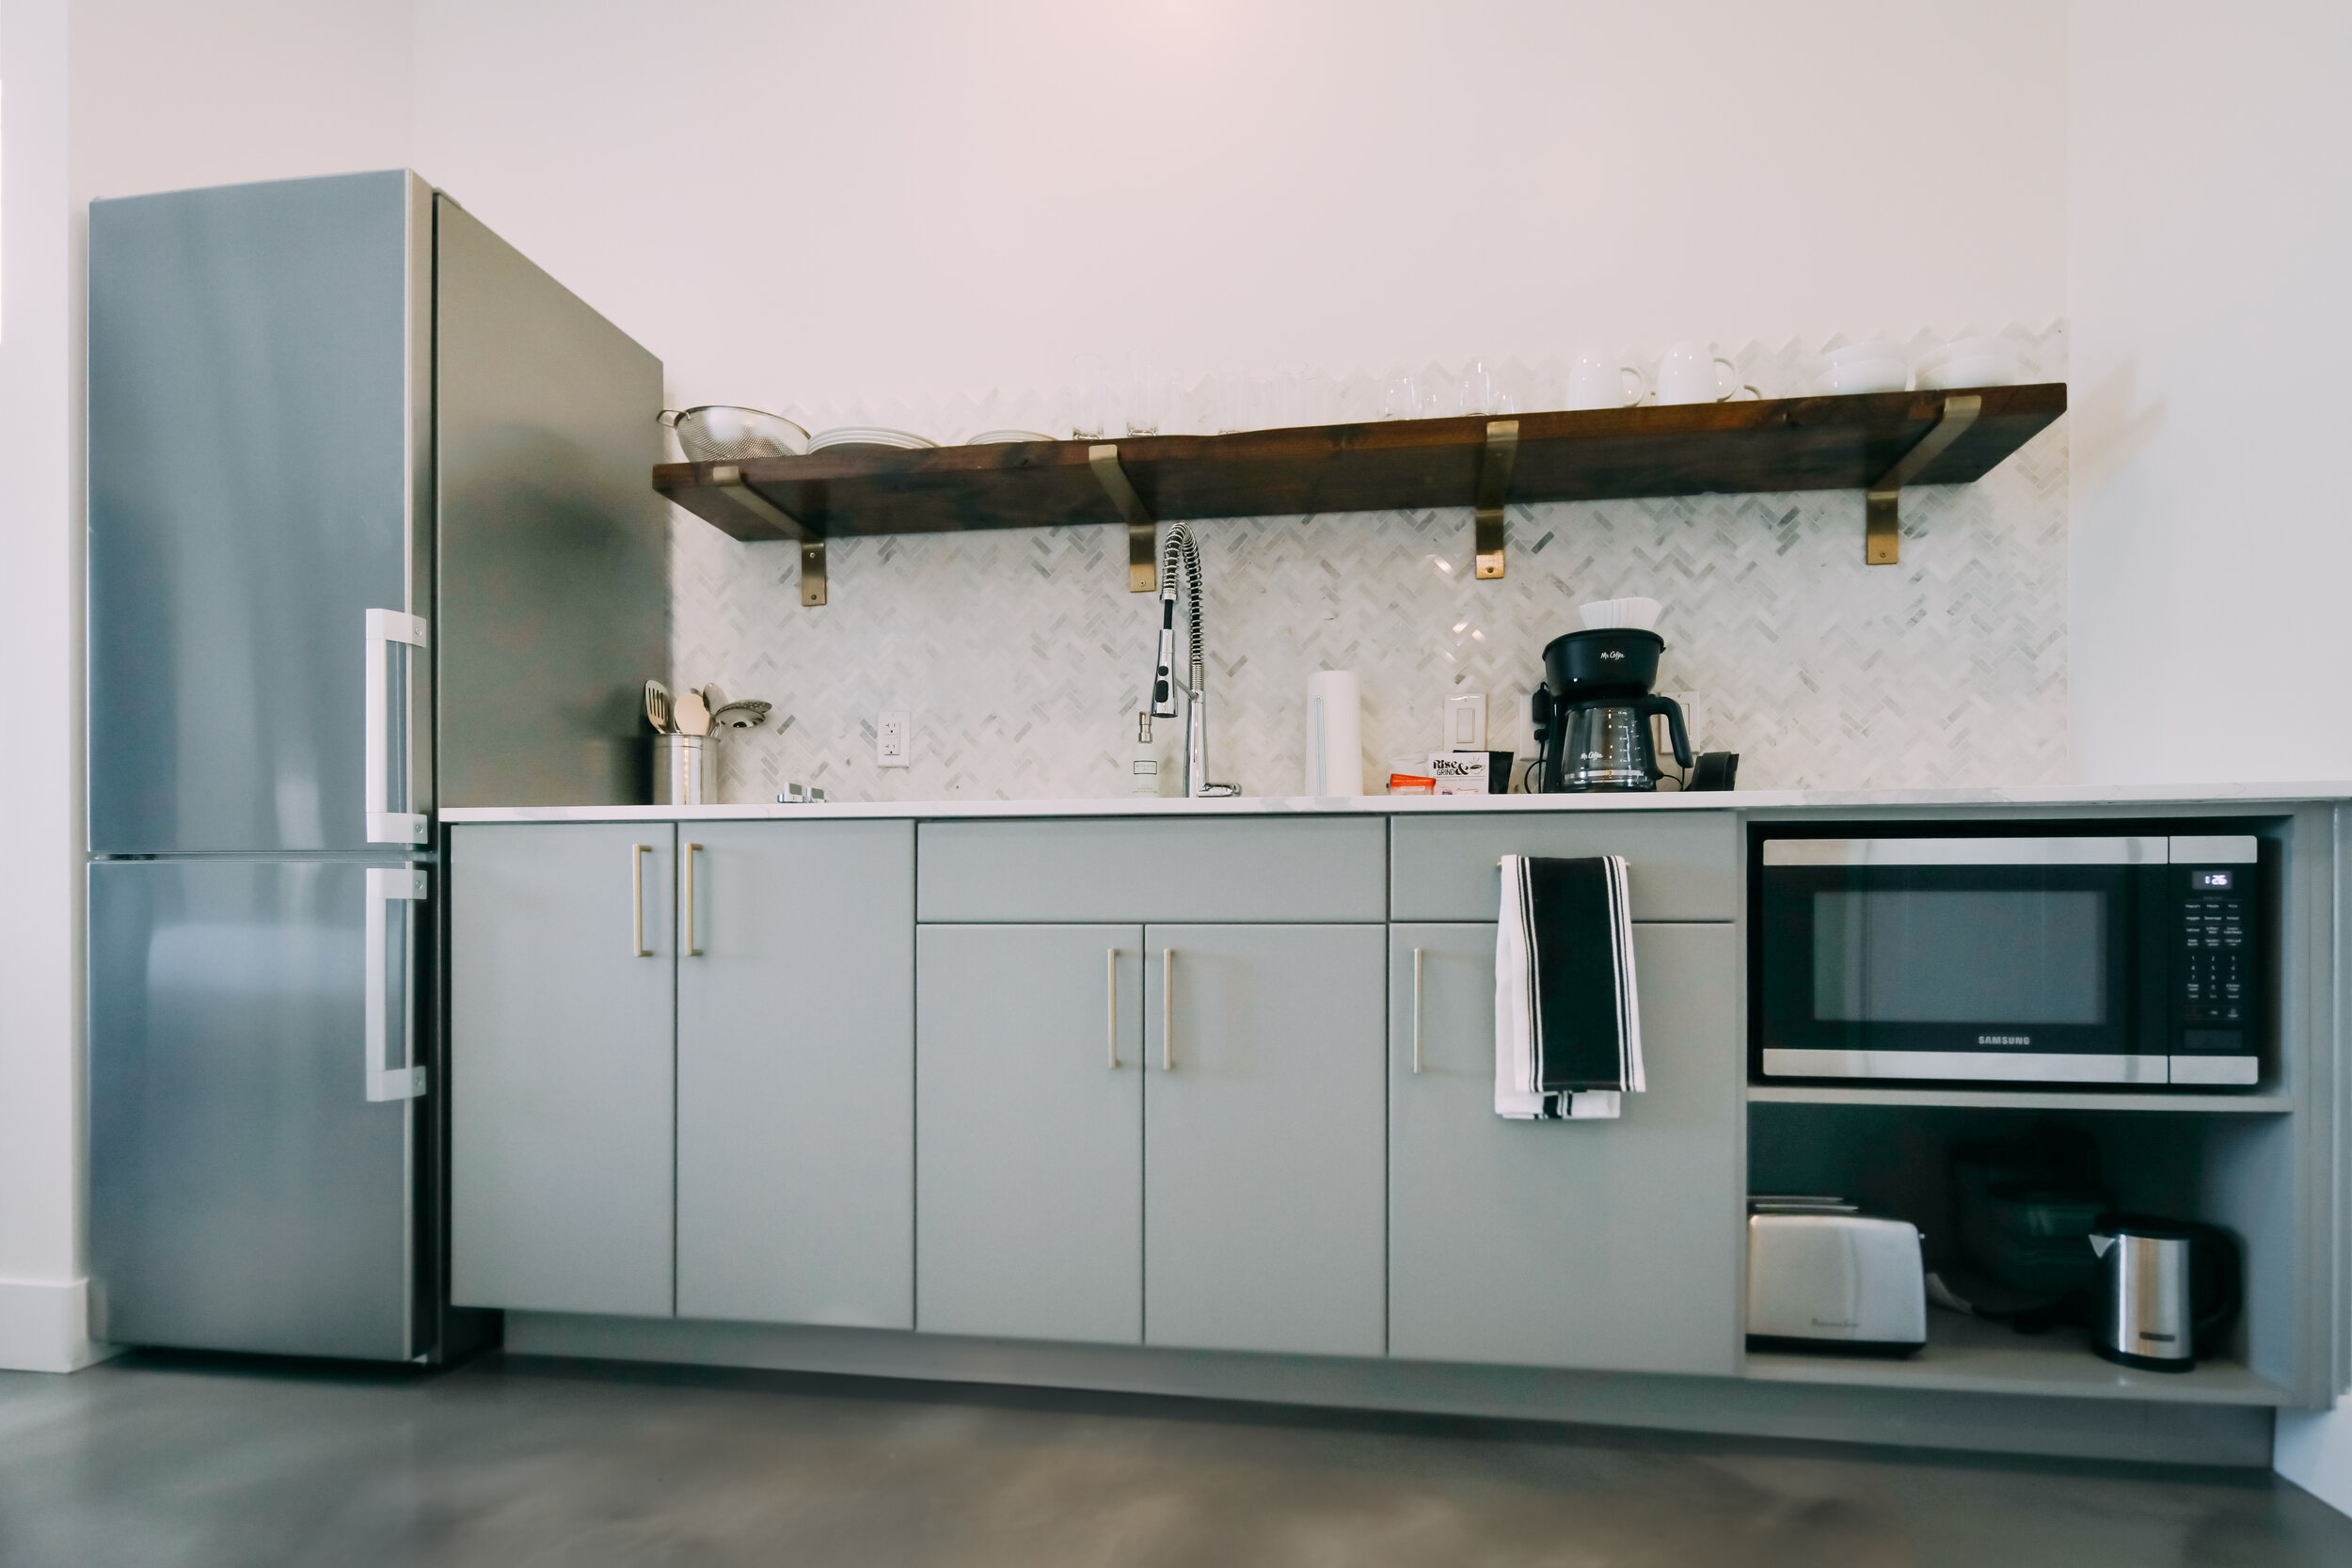 kitchenette with full-sized fridge, microwave, dishware